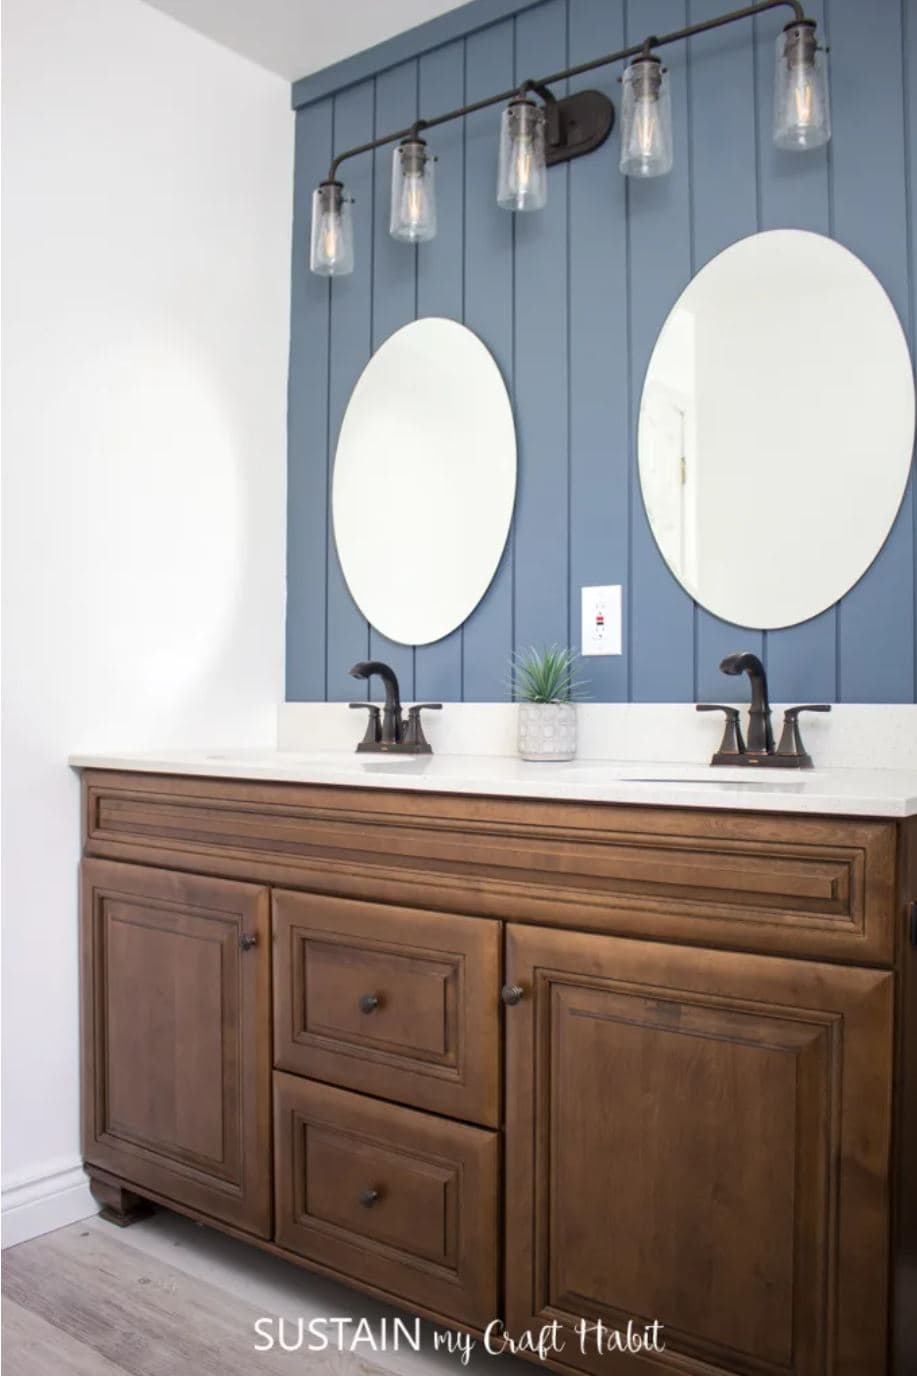 Vertical painted blue shiplap above a wooden bathroom vanity.